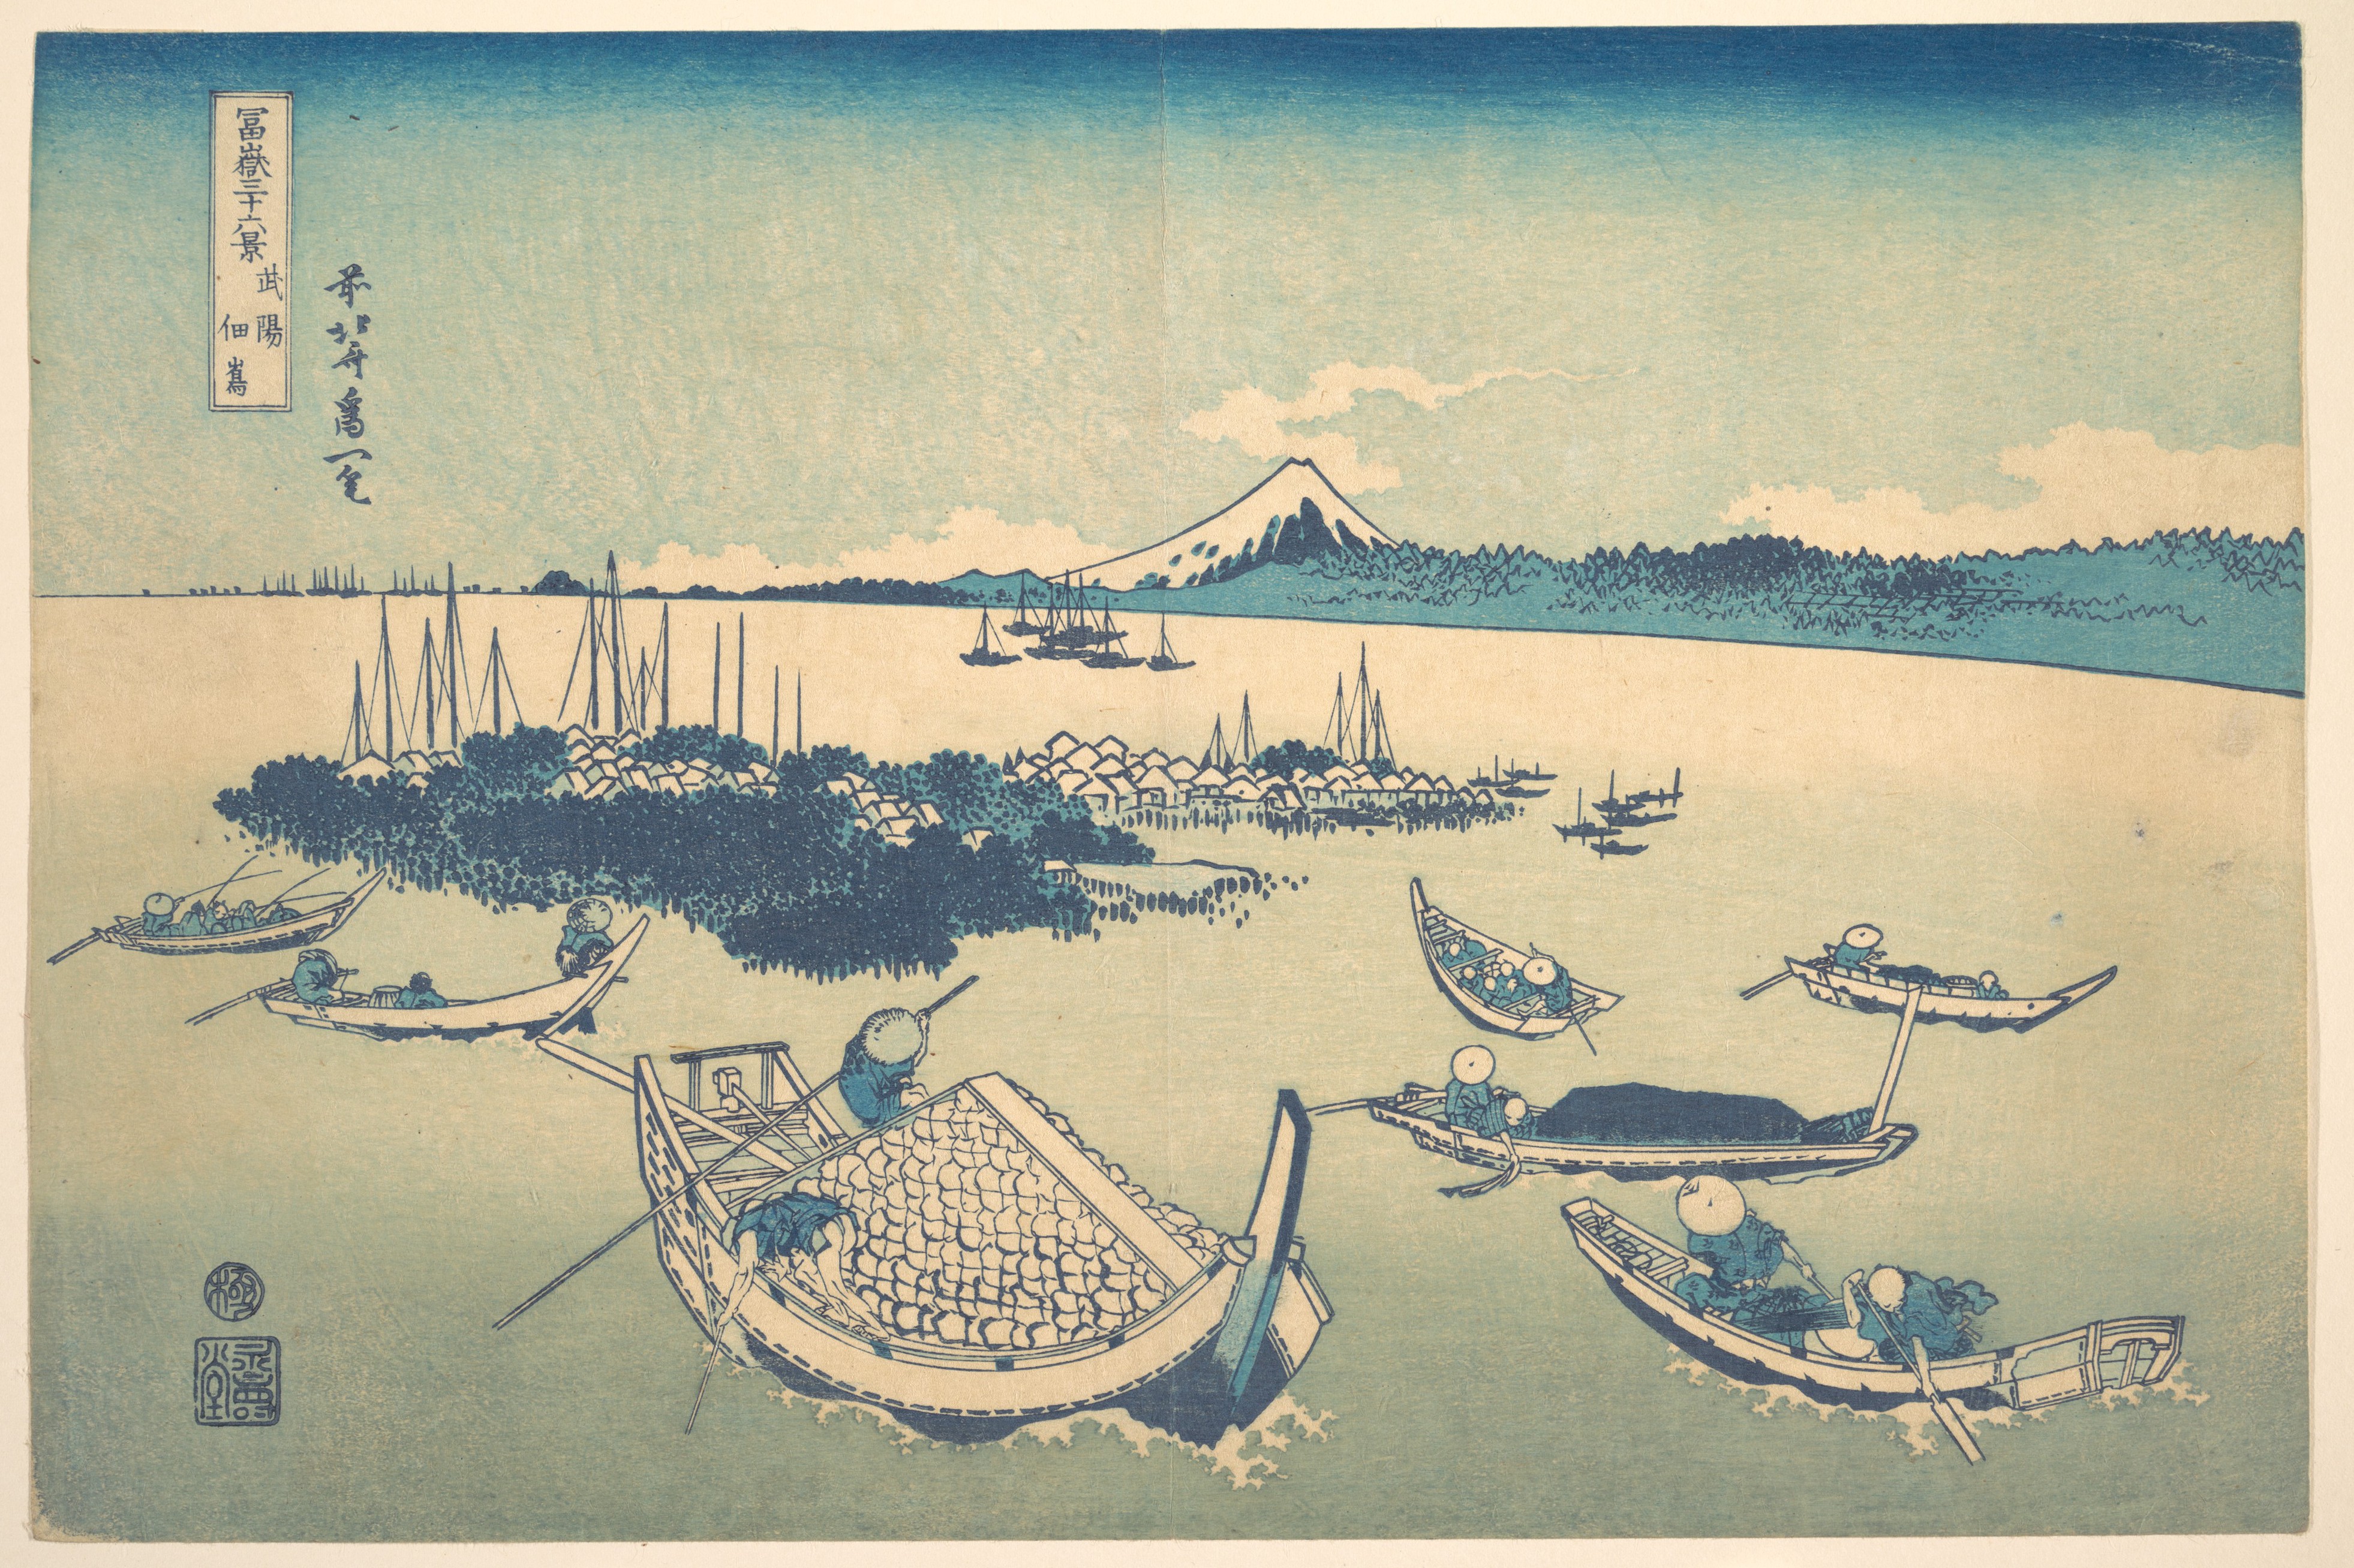 Katsushika Hokusai. Tsukudajima in Musashi Province, from the series Thirty-six Views of Mount Fuji